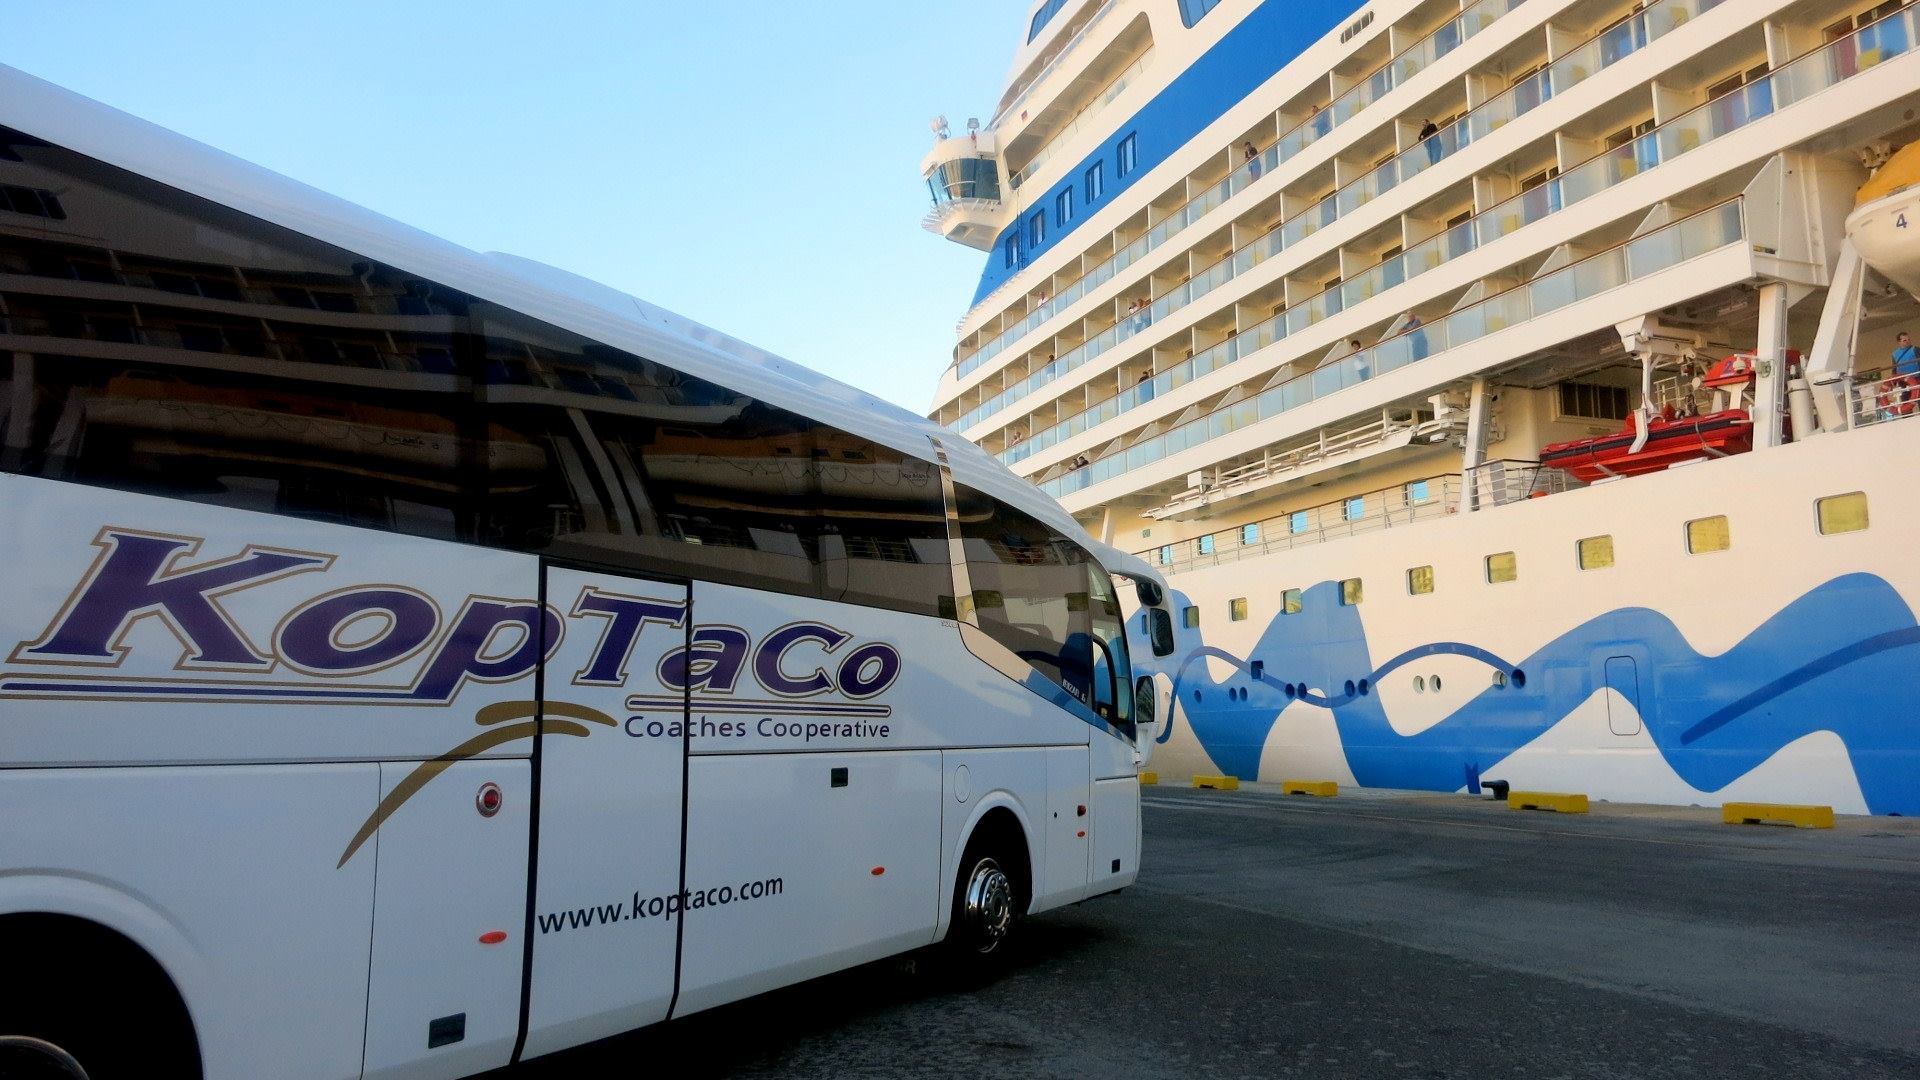 koptaco cruise liner hire bus transfers tours